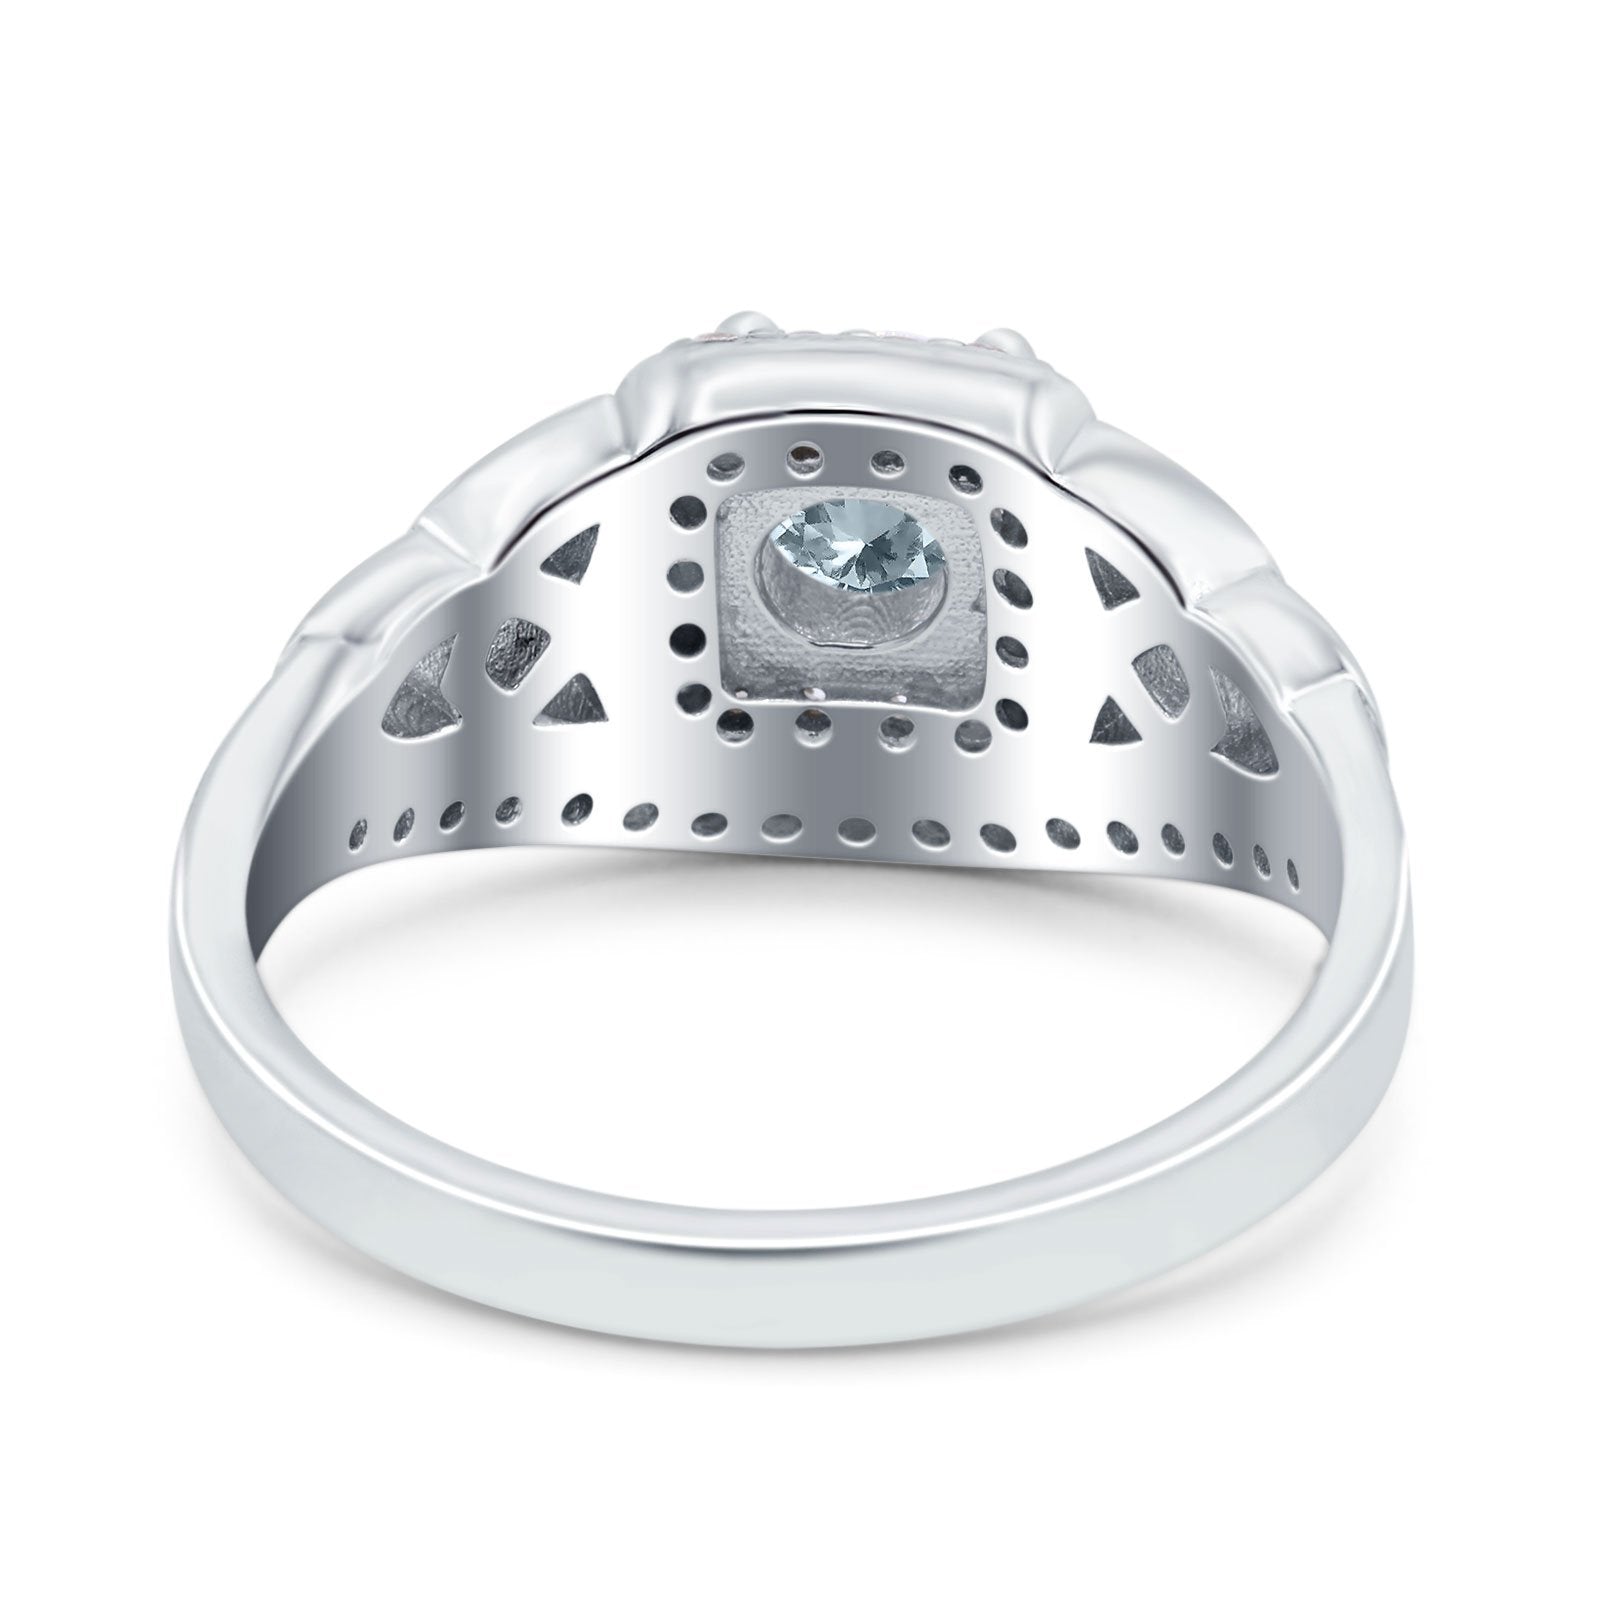 14K White Gold 0.69ct Round Art Deco 5mm G SI Natural Aquamarine Diamond Engagement Wedding Ring Size 6.5